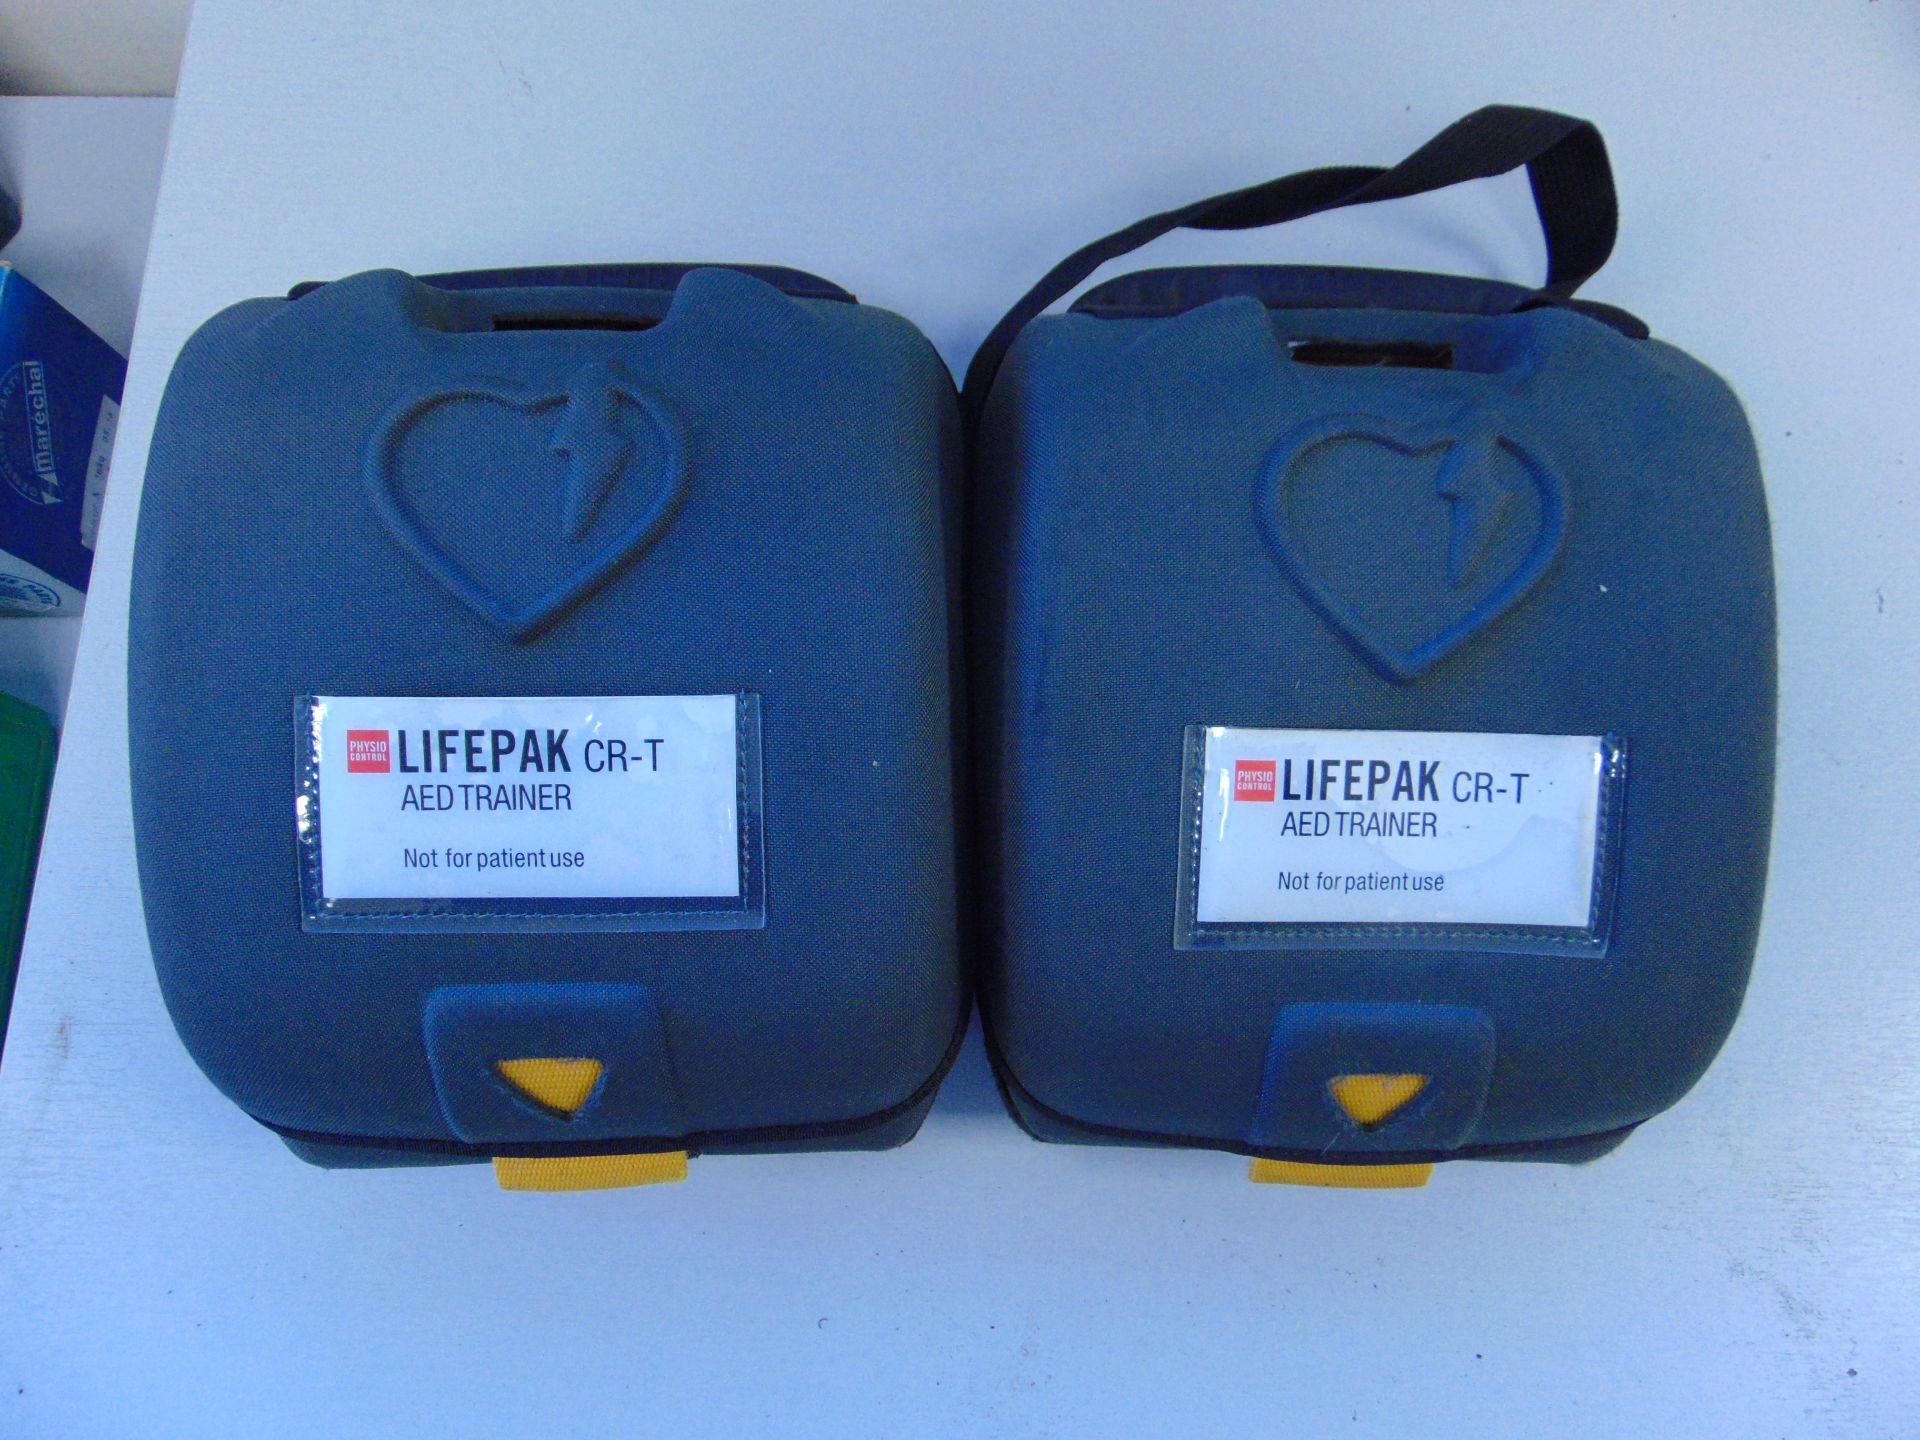 2 x Physio Controls Lifepak CR-T Defibrillator AED Trainer Unit in Carry Case - Image 2 of 4